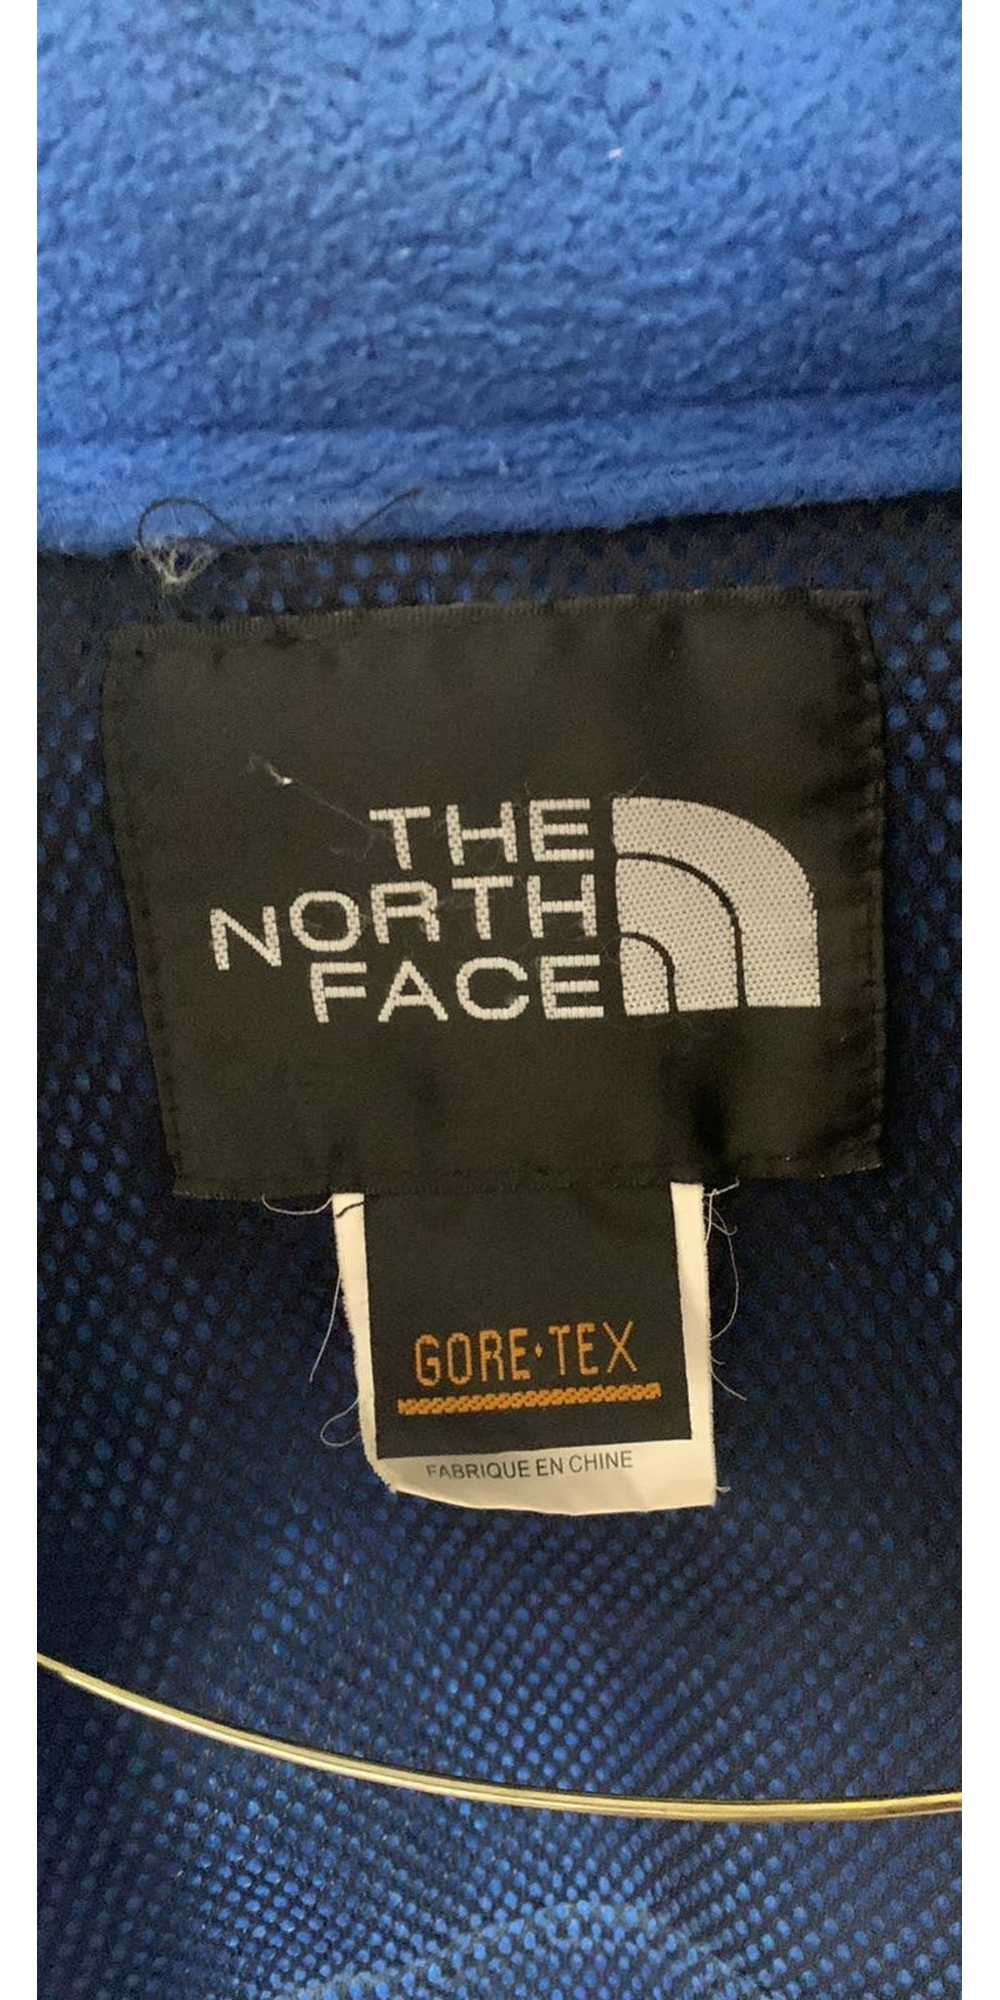 Goretex × The North Face The Northface Goretex - image 5